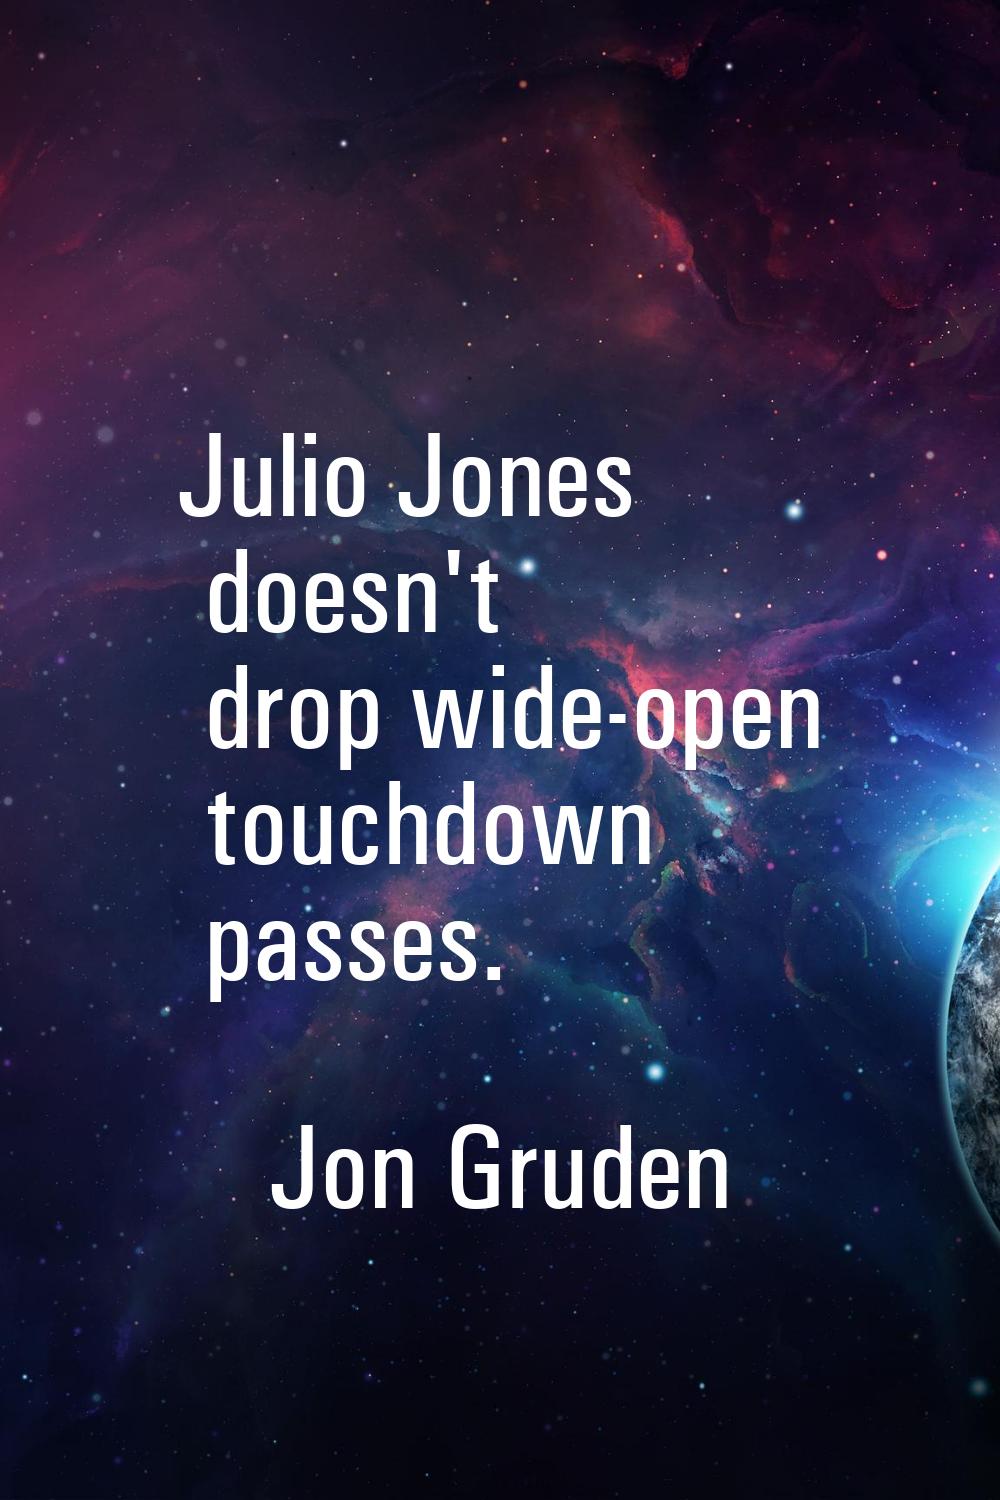 Julio Jones doesn't drop wide-open touchdown passes.